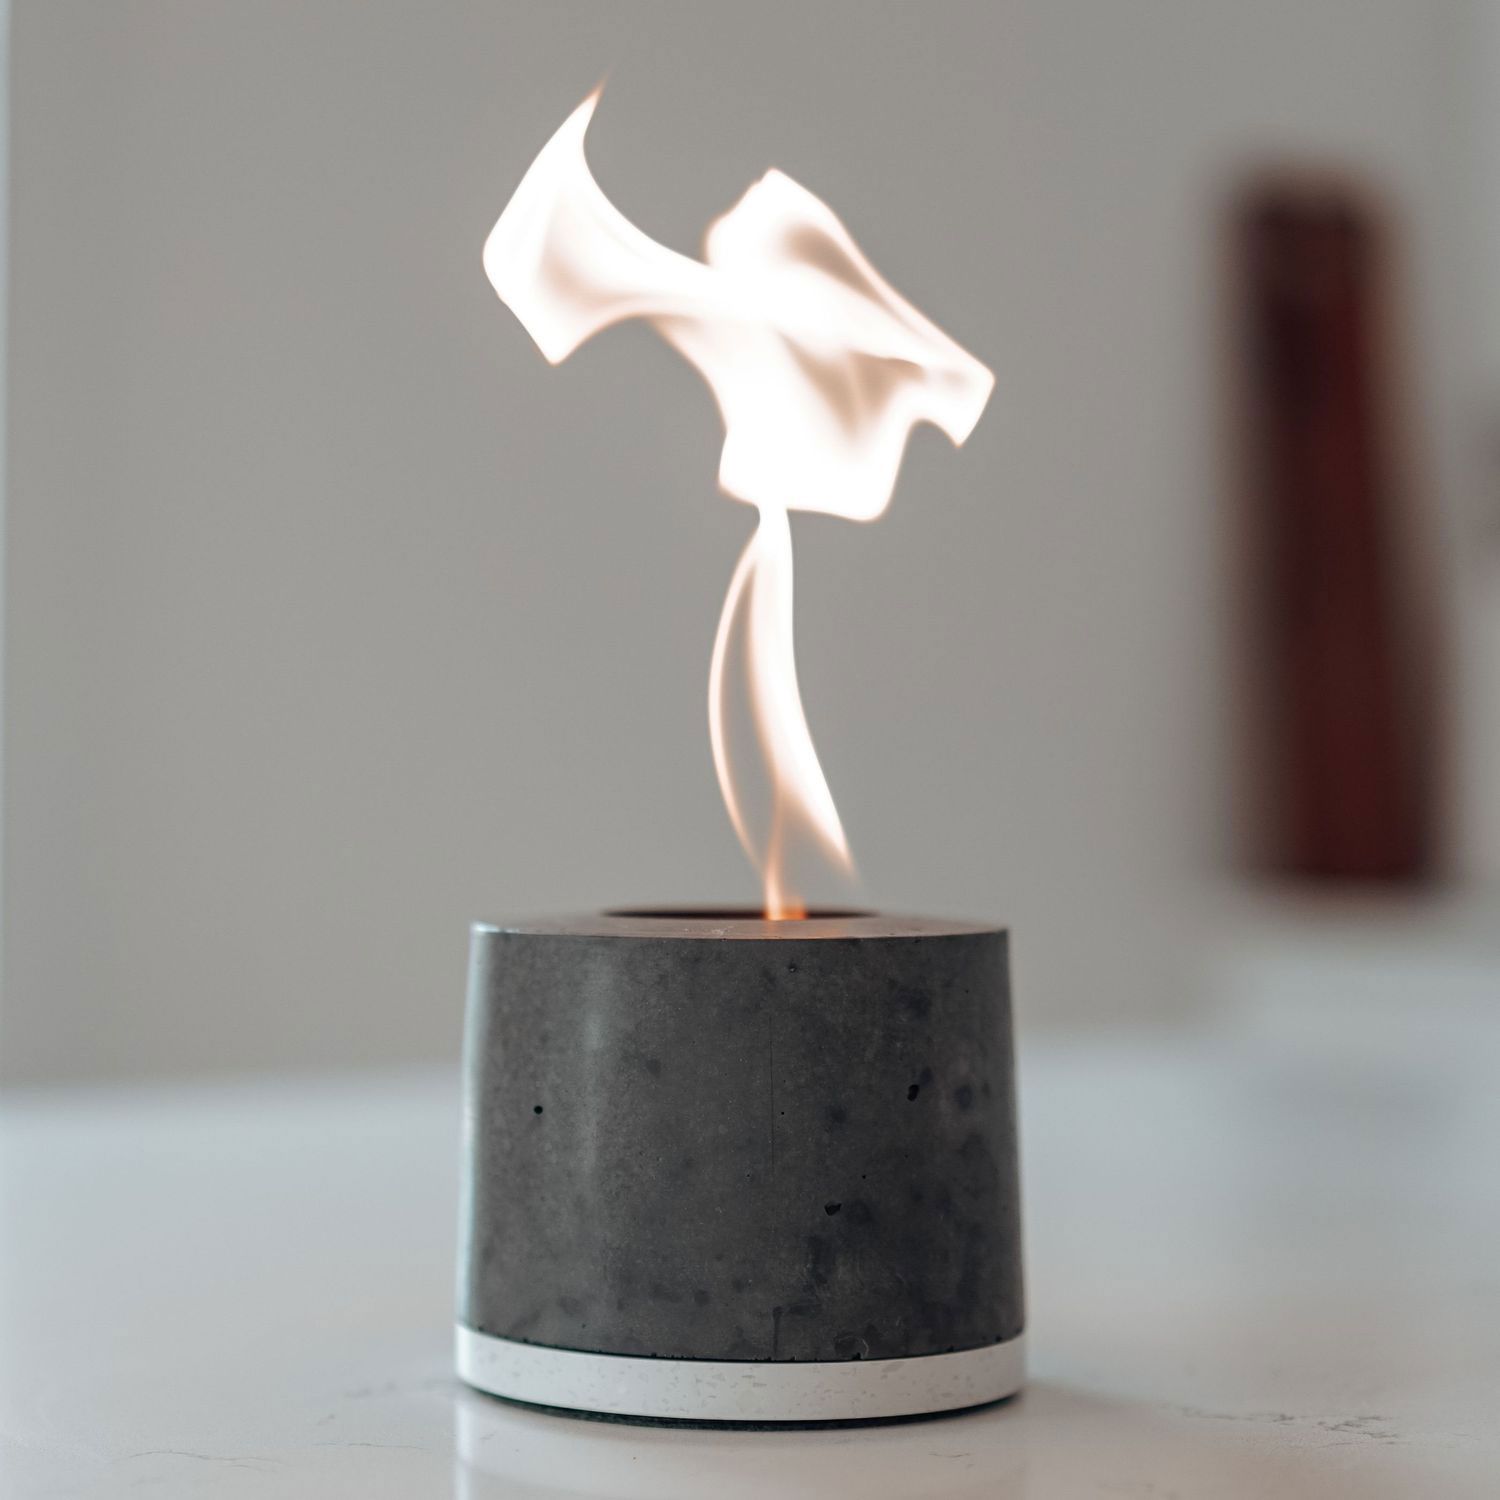 Parhaat lahjat, lahjaideoita naisille - Flîkr Fire Personal Concrete Fireplace